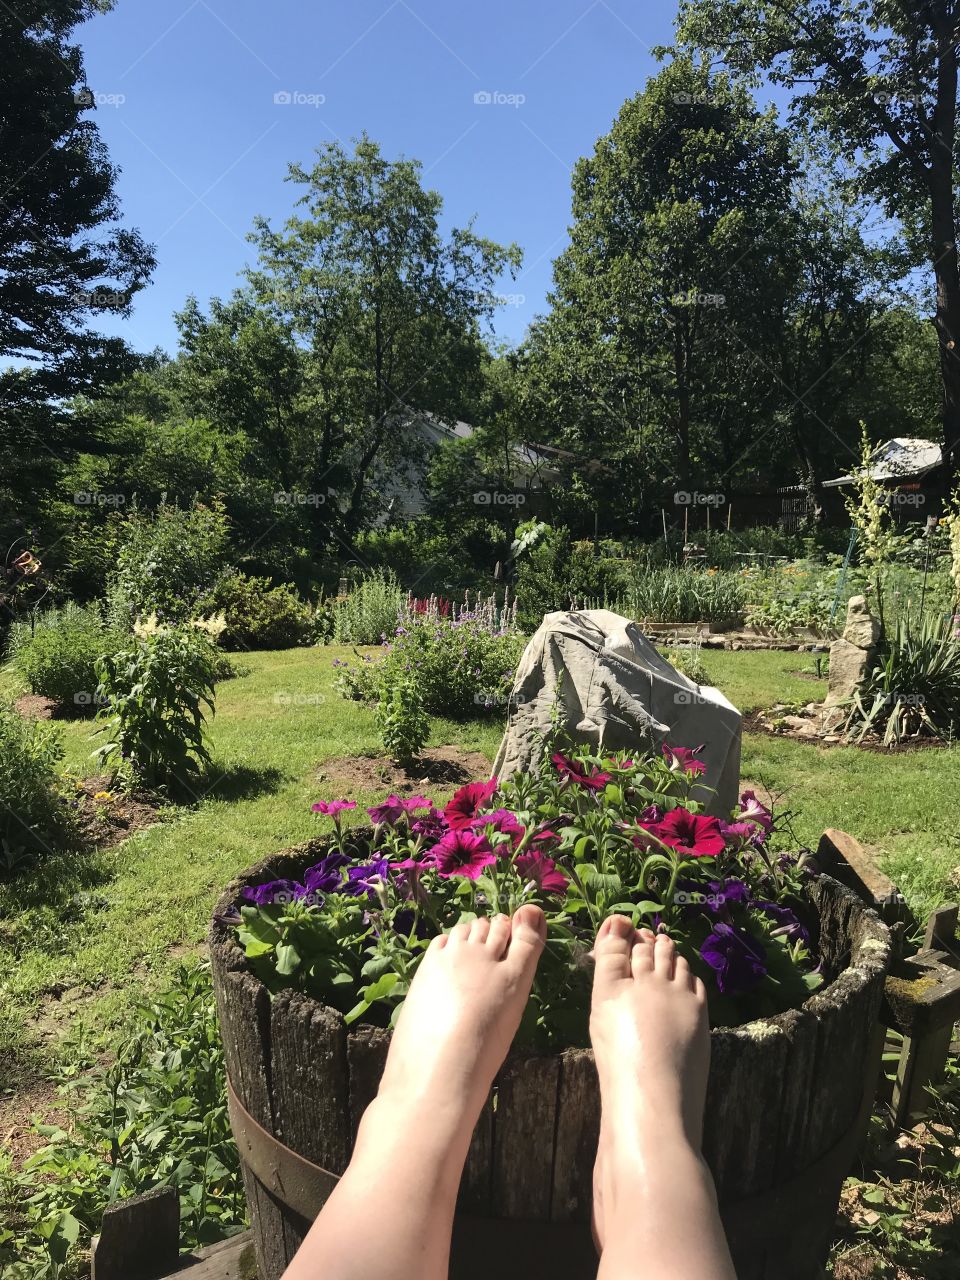 Relaxing in the gardens